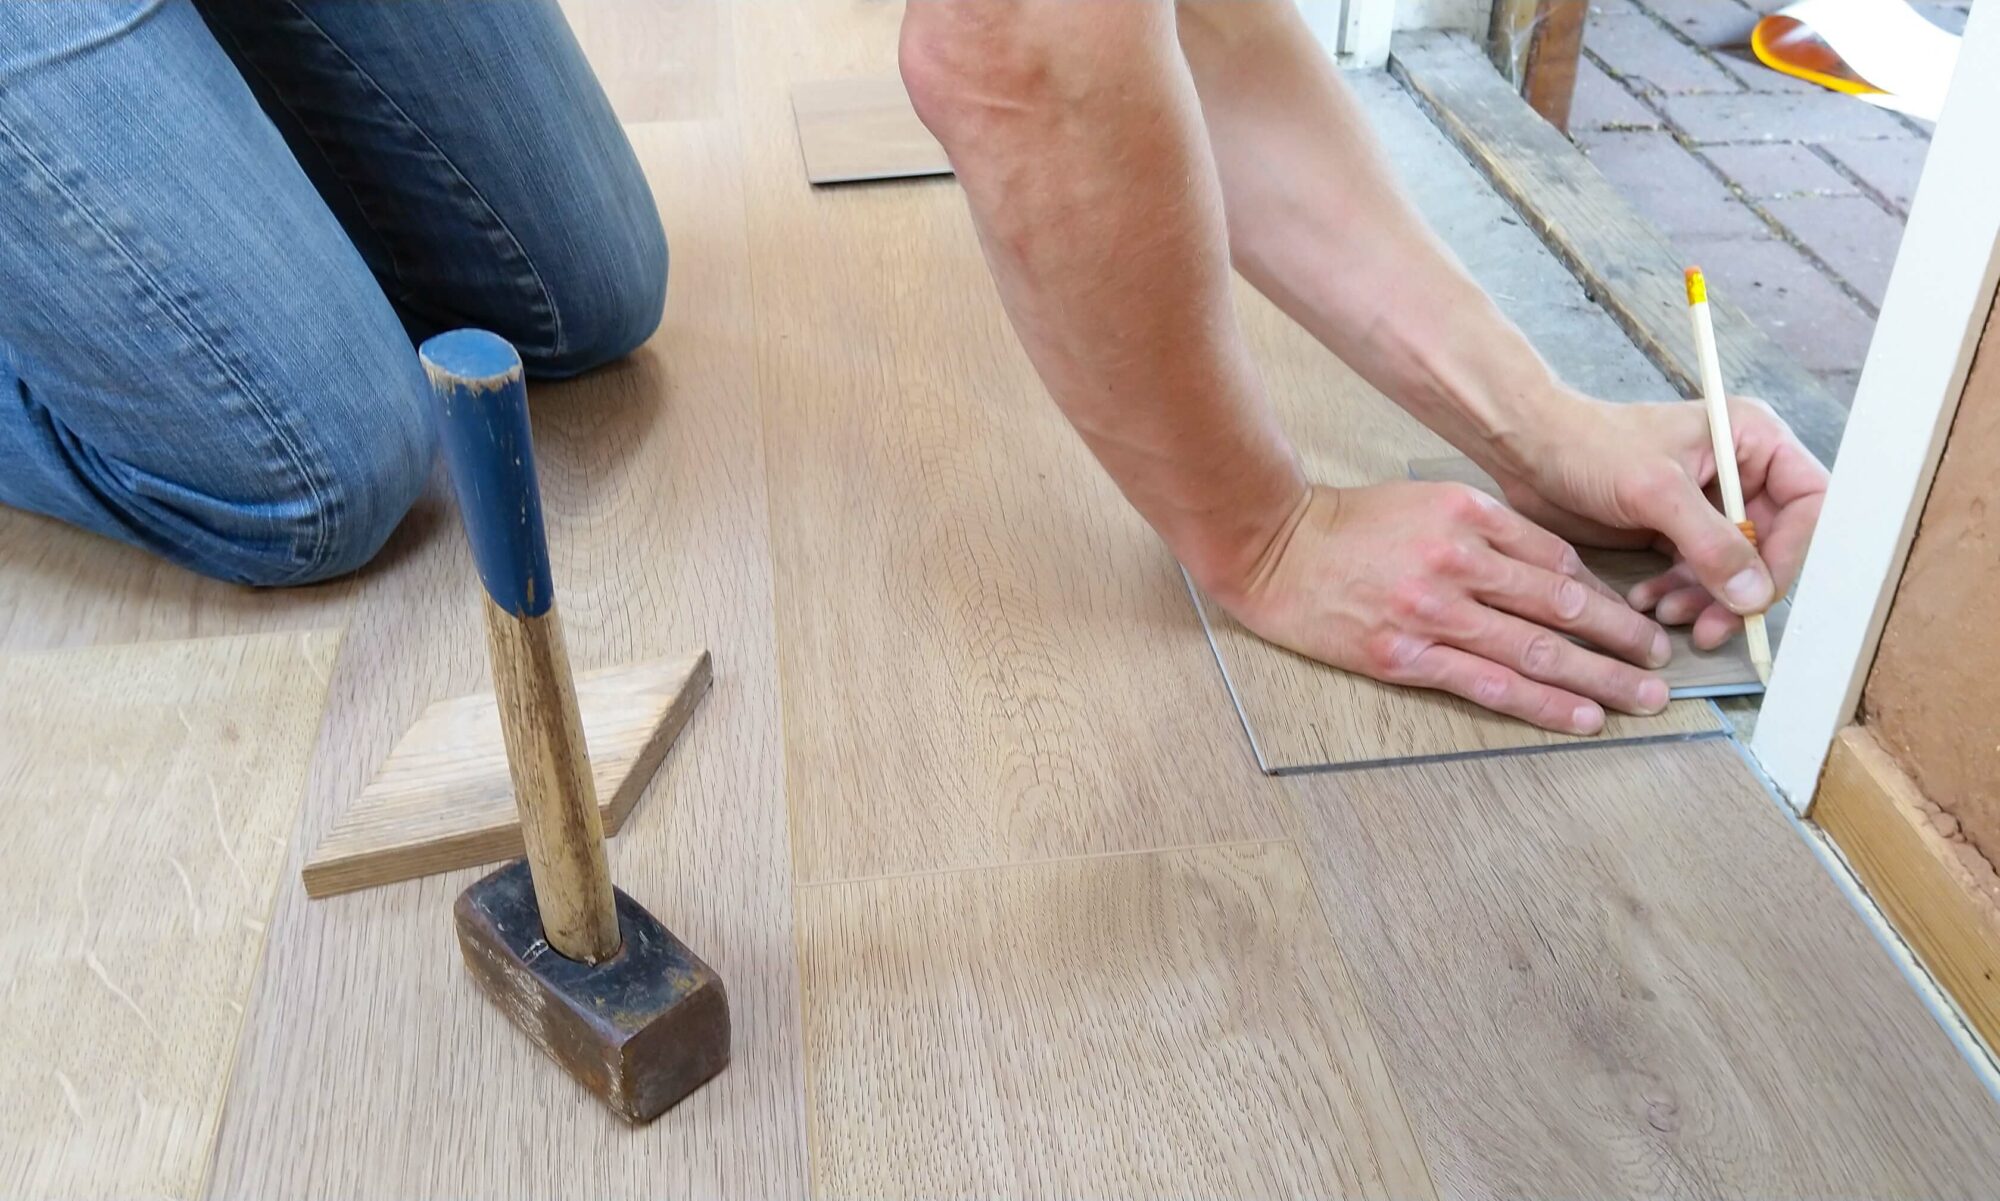 Stock image of man replacing flooring.